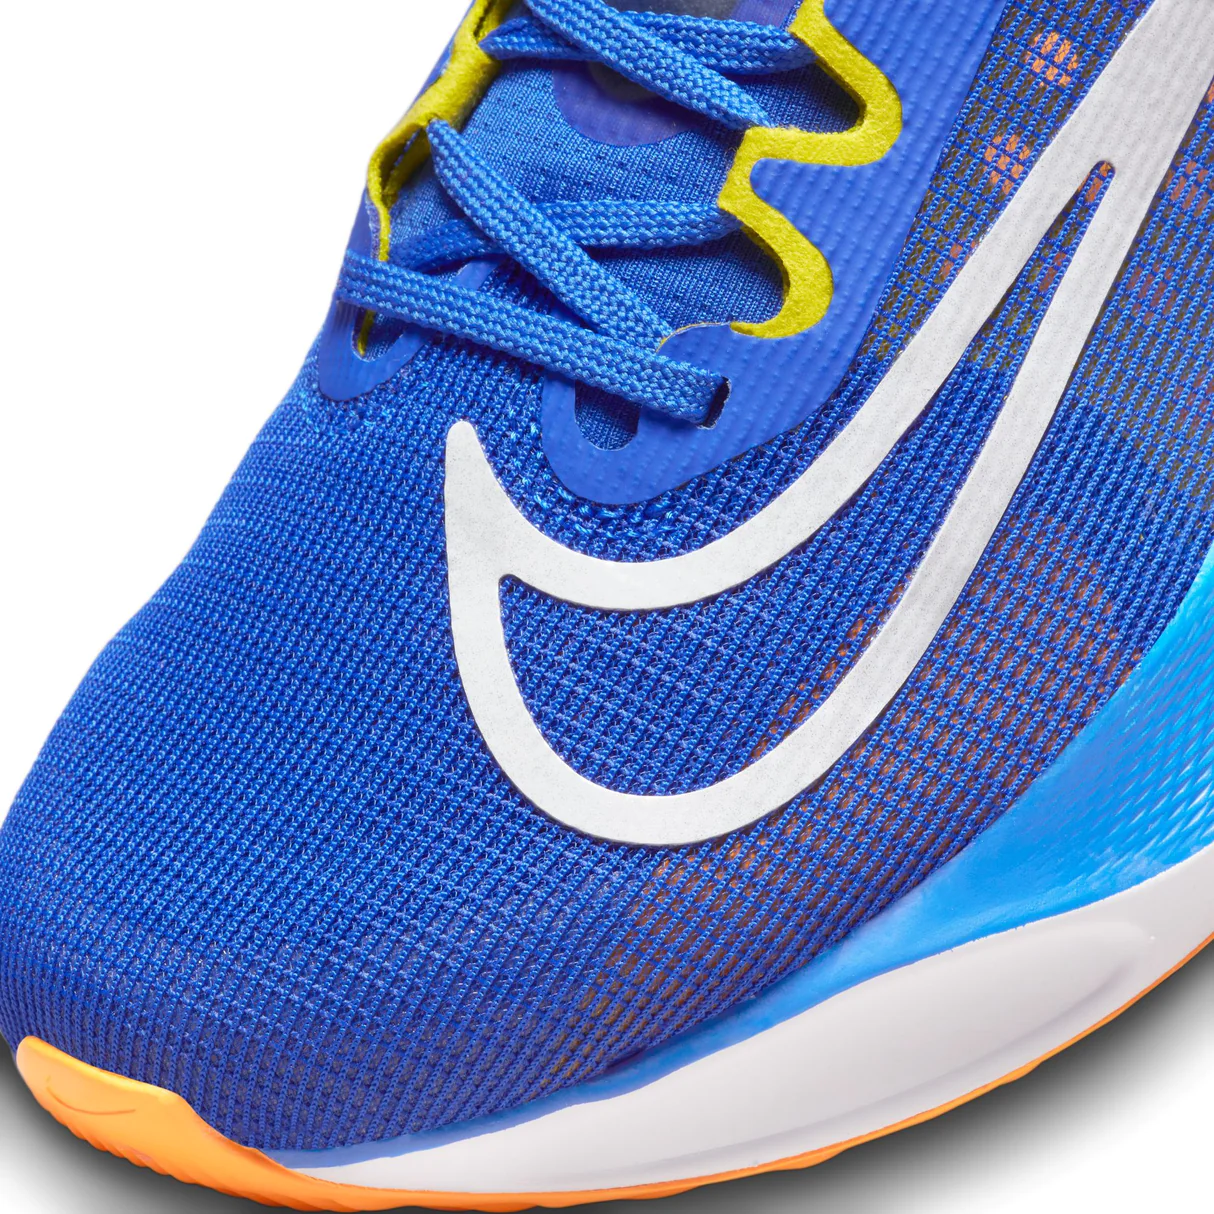 Nike Men's Zoom Fly 5 Shoes - Racer Blue / White / High Voltage / Sundial